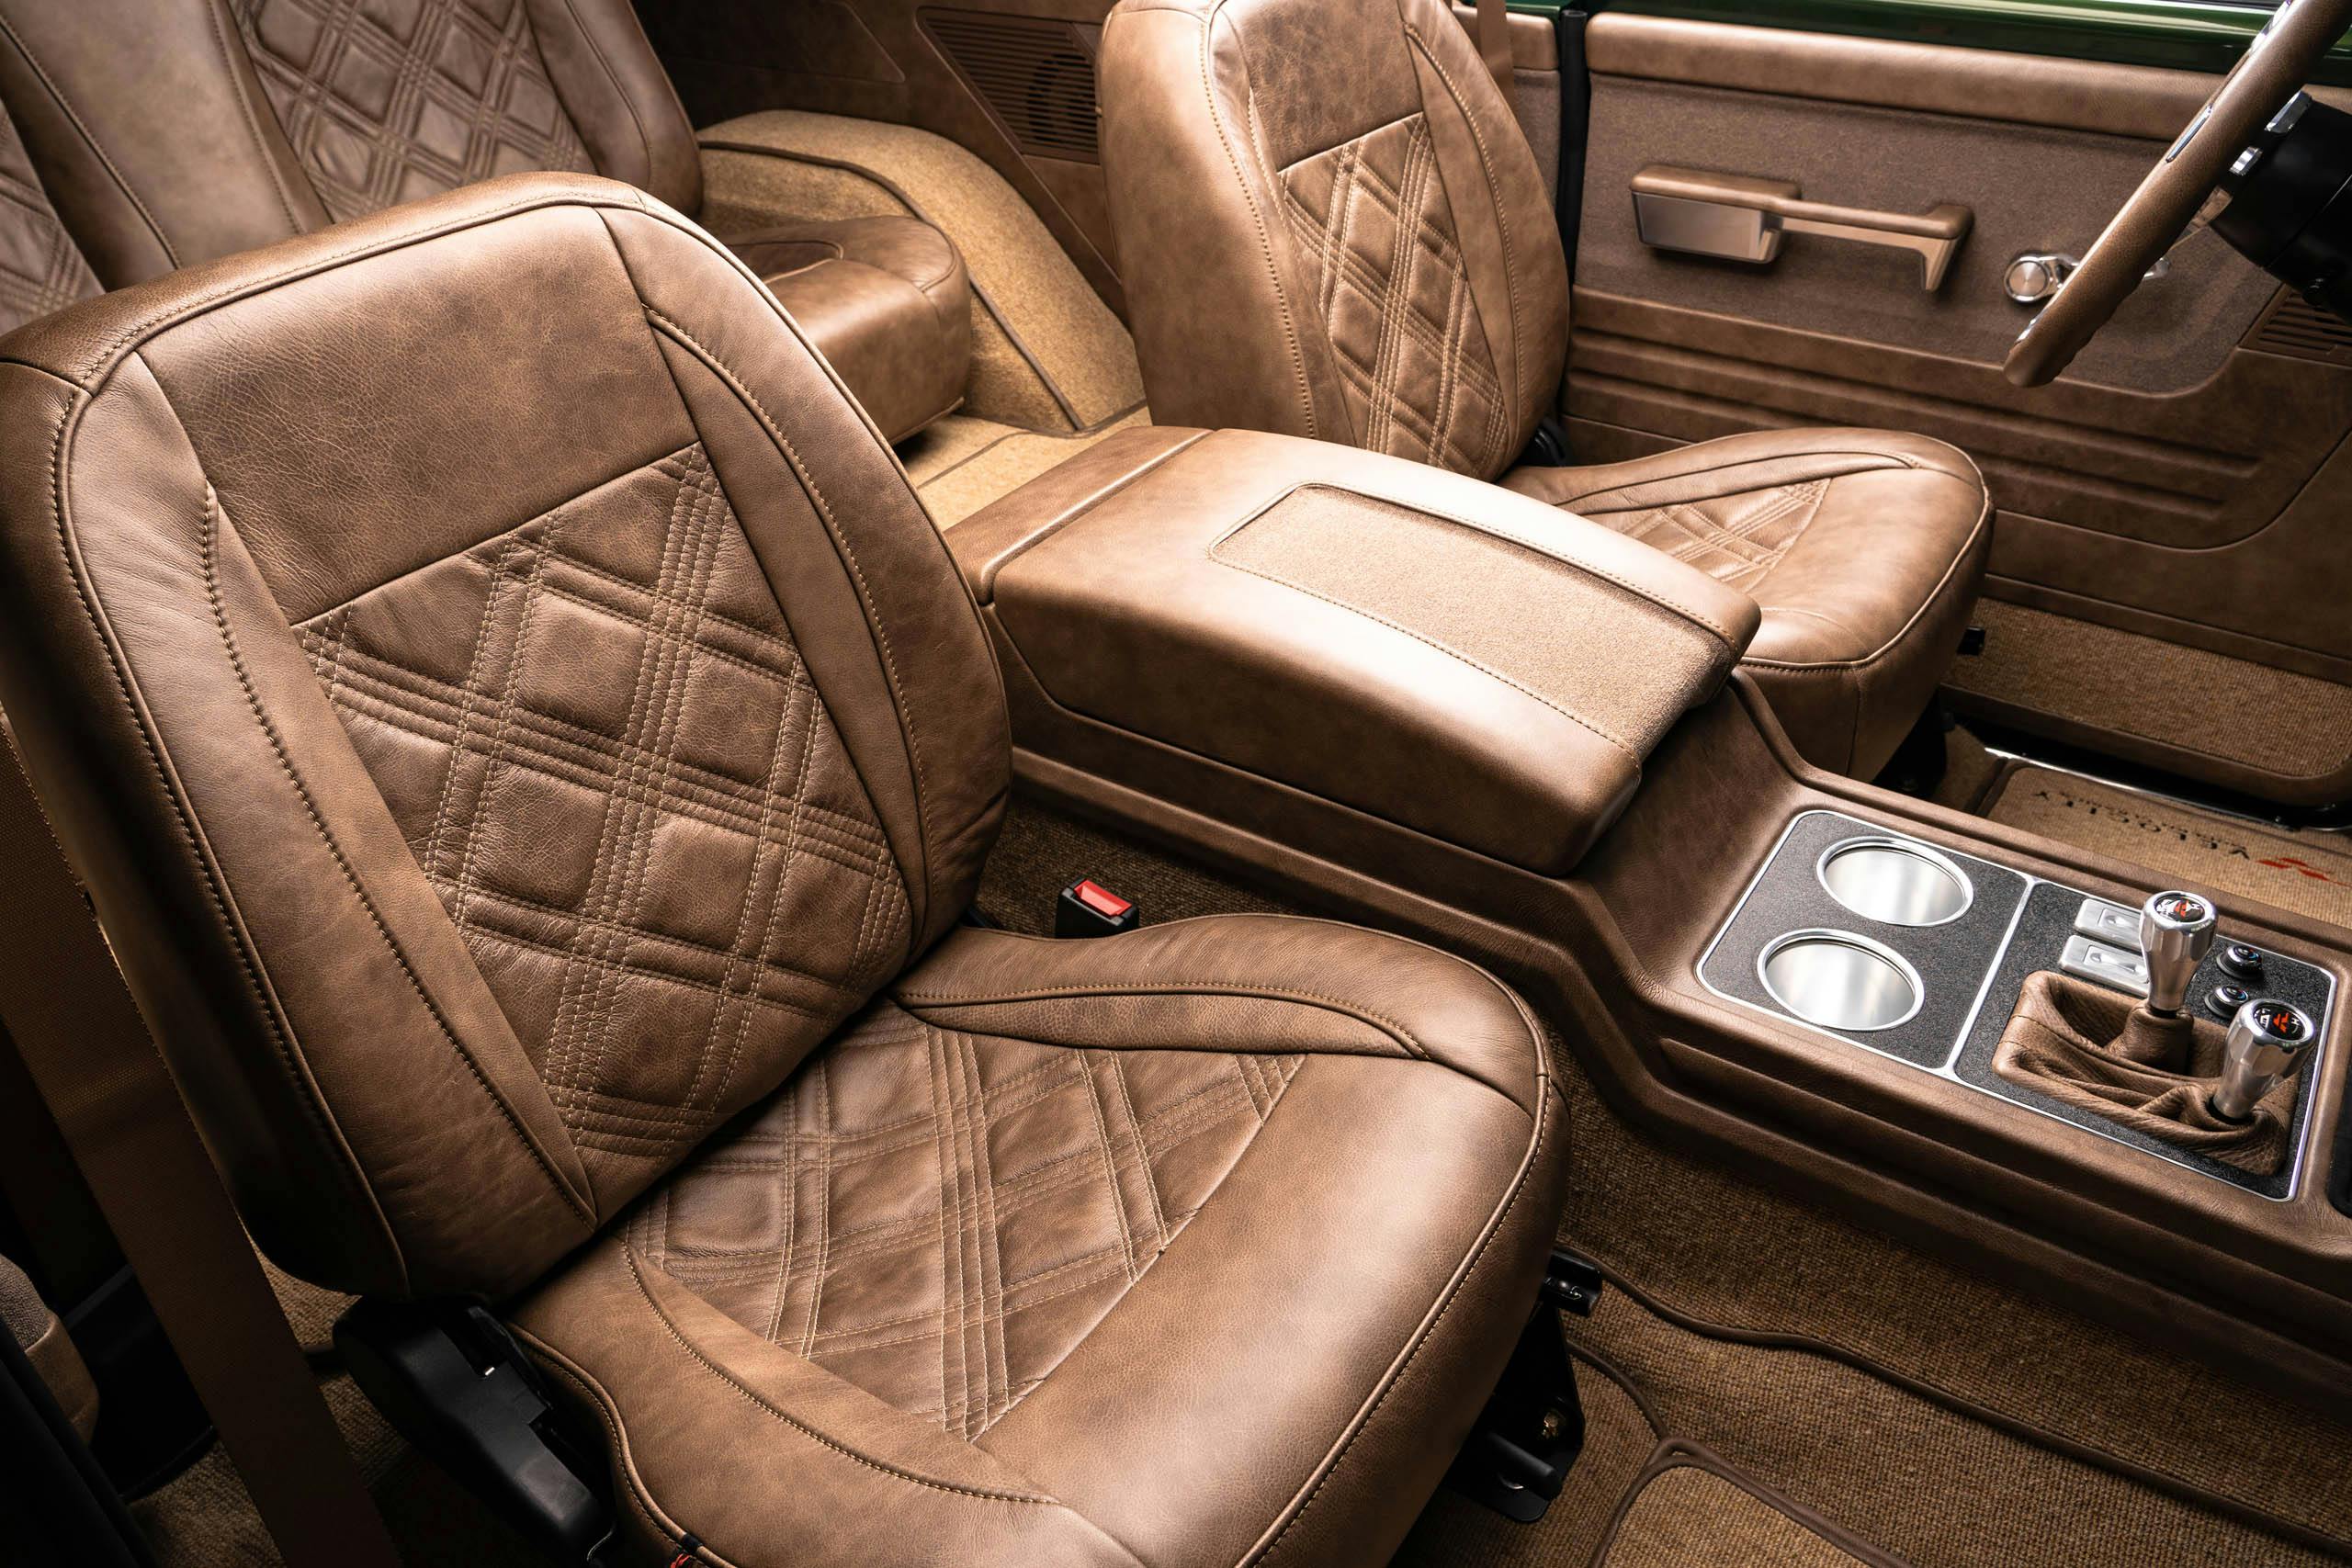 Velocity Modern Classics K5 Chevy Blazer restomod interior front seats from passenger's side